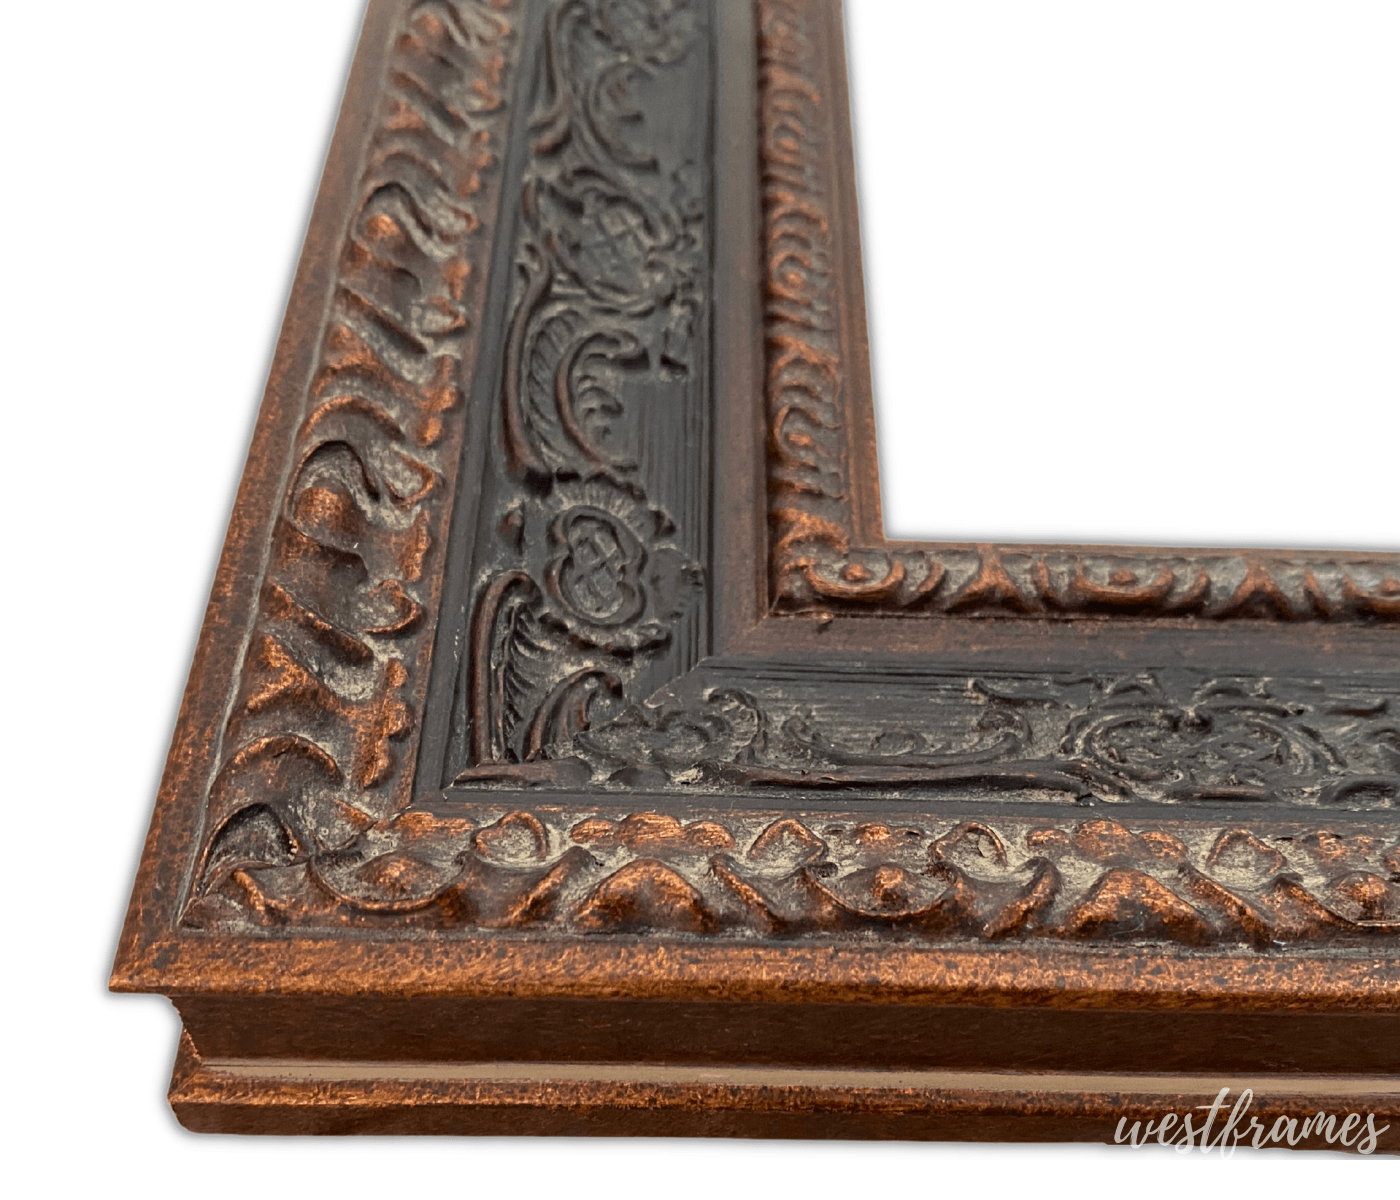 Parisienne Ornate Embossed Wood Picture Frame Antique Bronze Black Patina Finish 3" Wide - West Frames